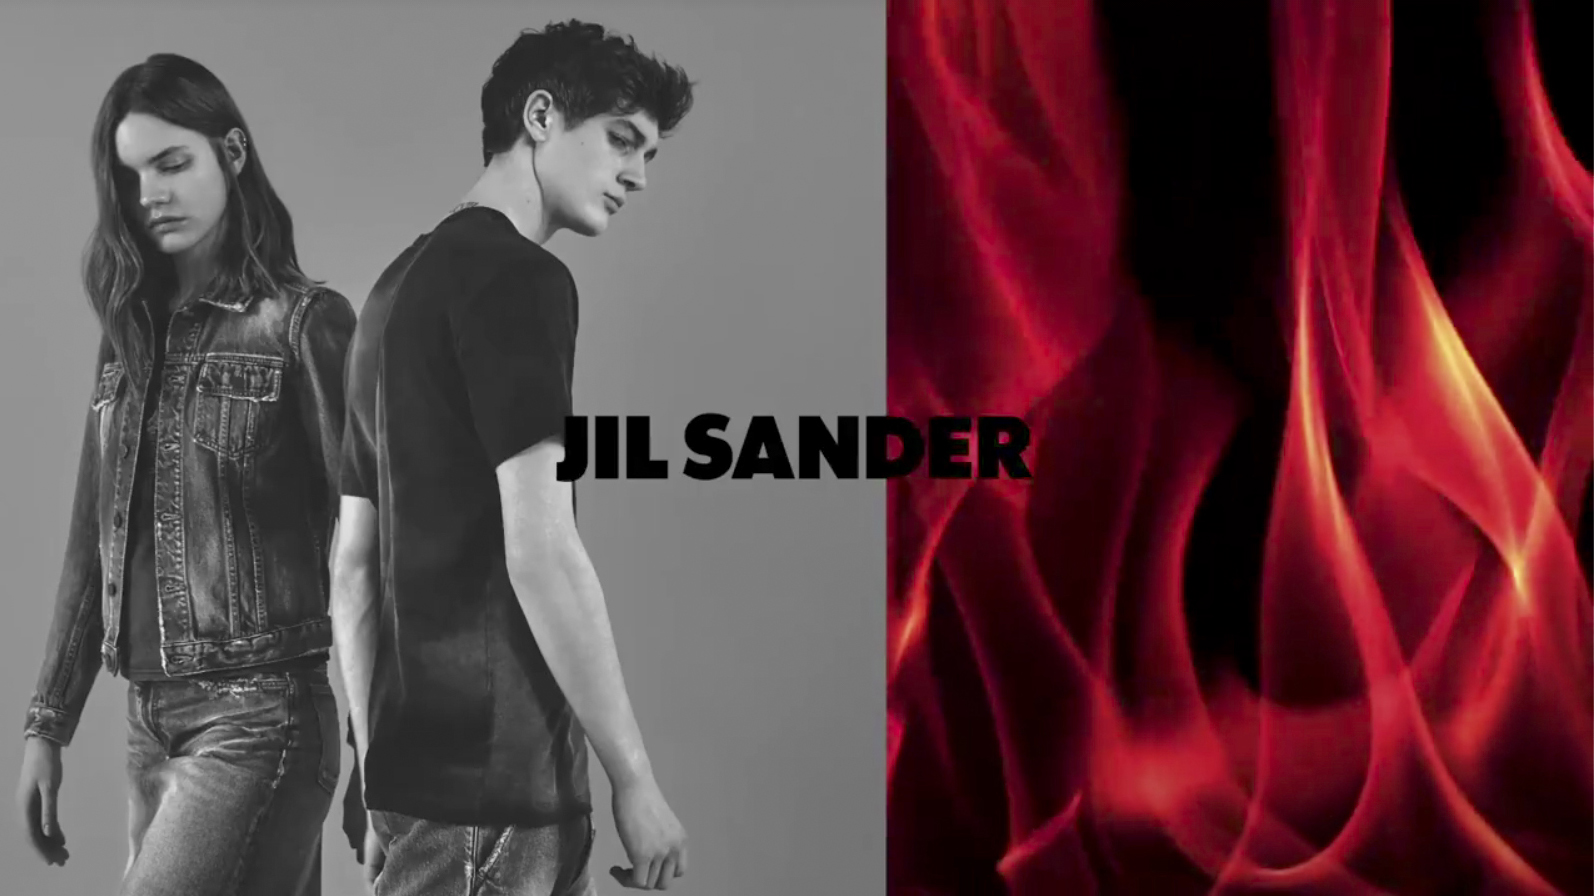 Jil Sander Adv 2016 “Fire made in Japan” | Alan Chies | Jil Sander | L'Officiel Hommes Spain | Gabriella Carrubba | Numerique Retouch Photo Retouching Studio